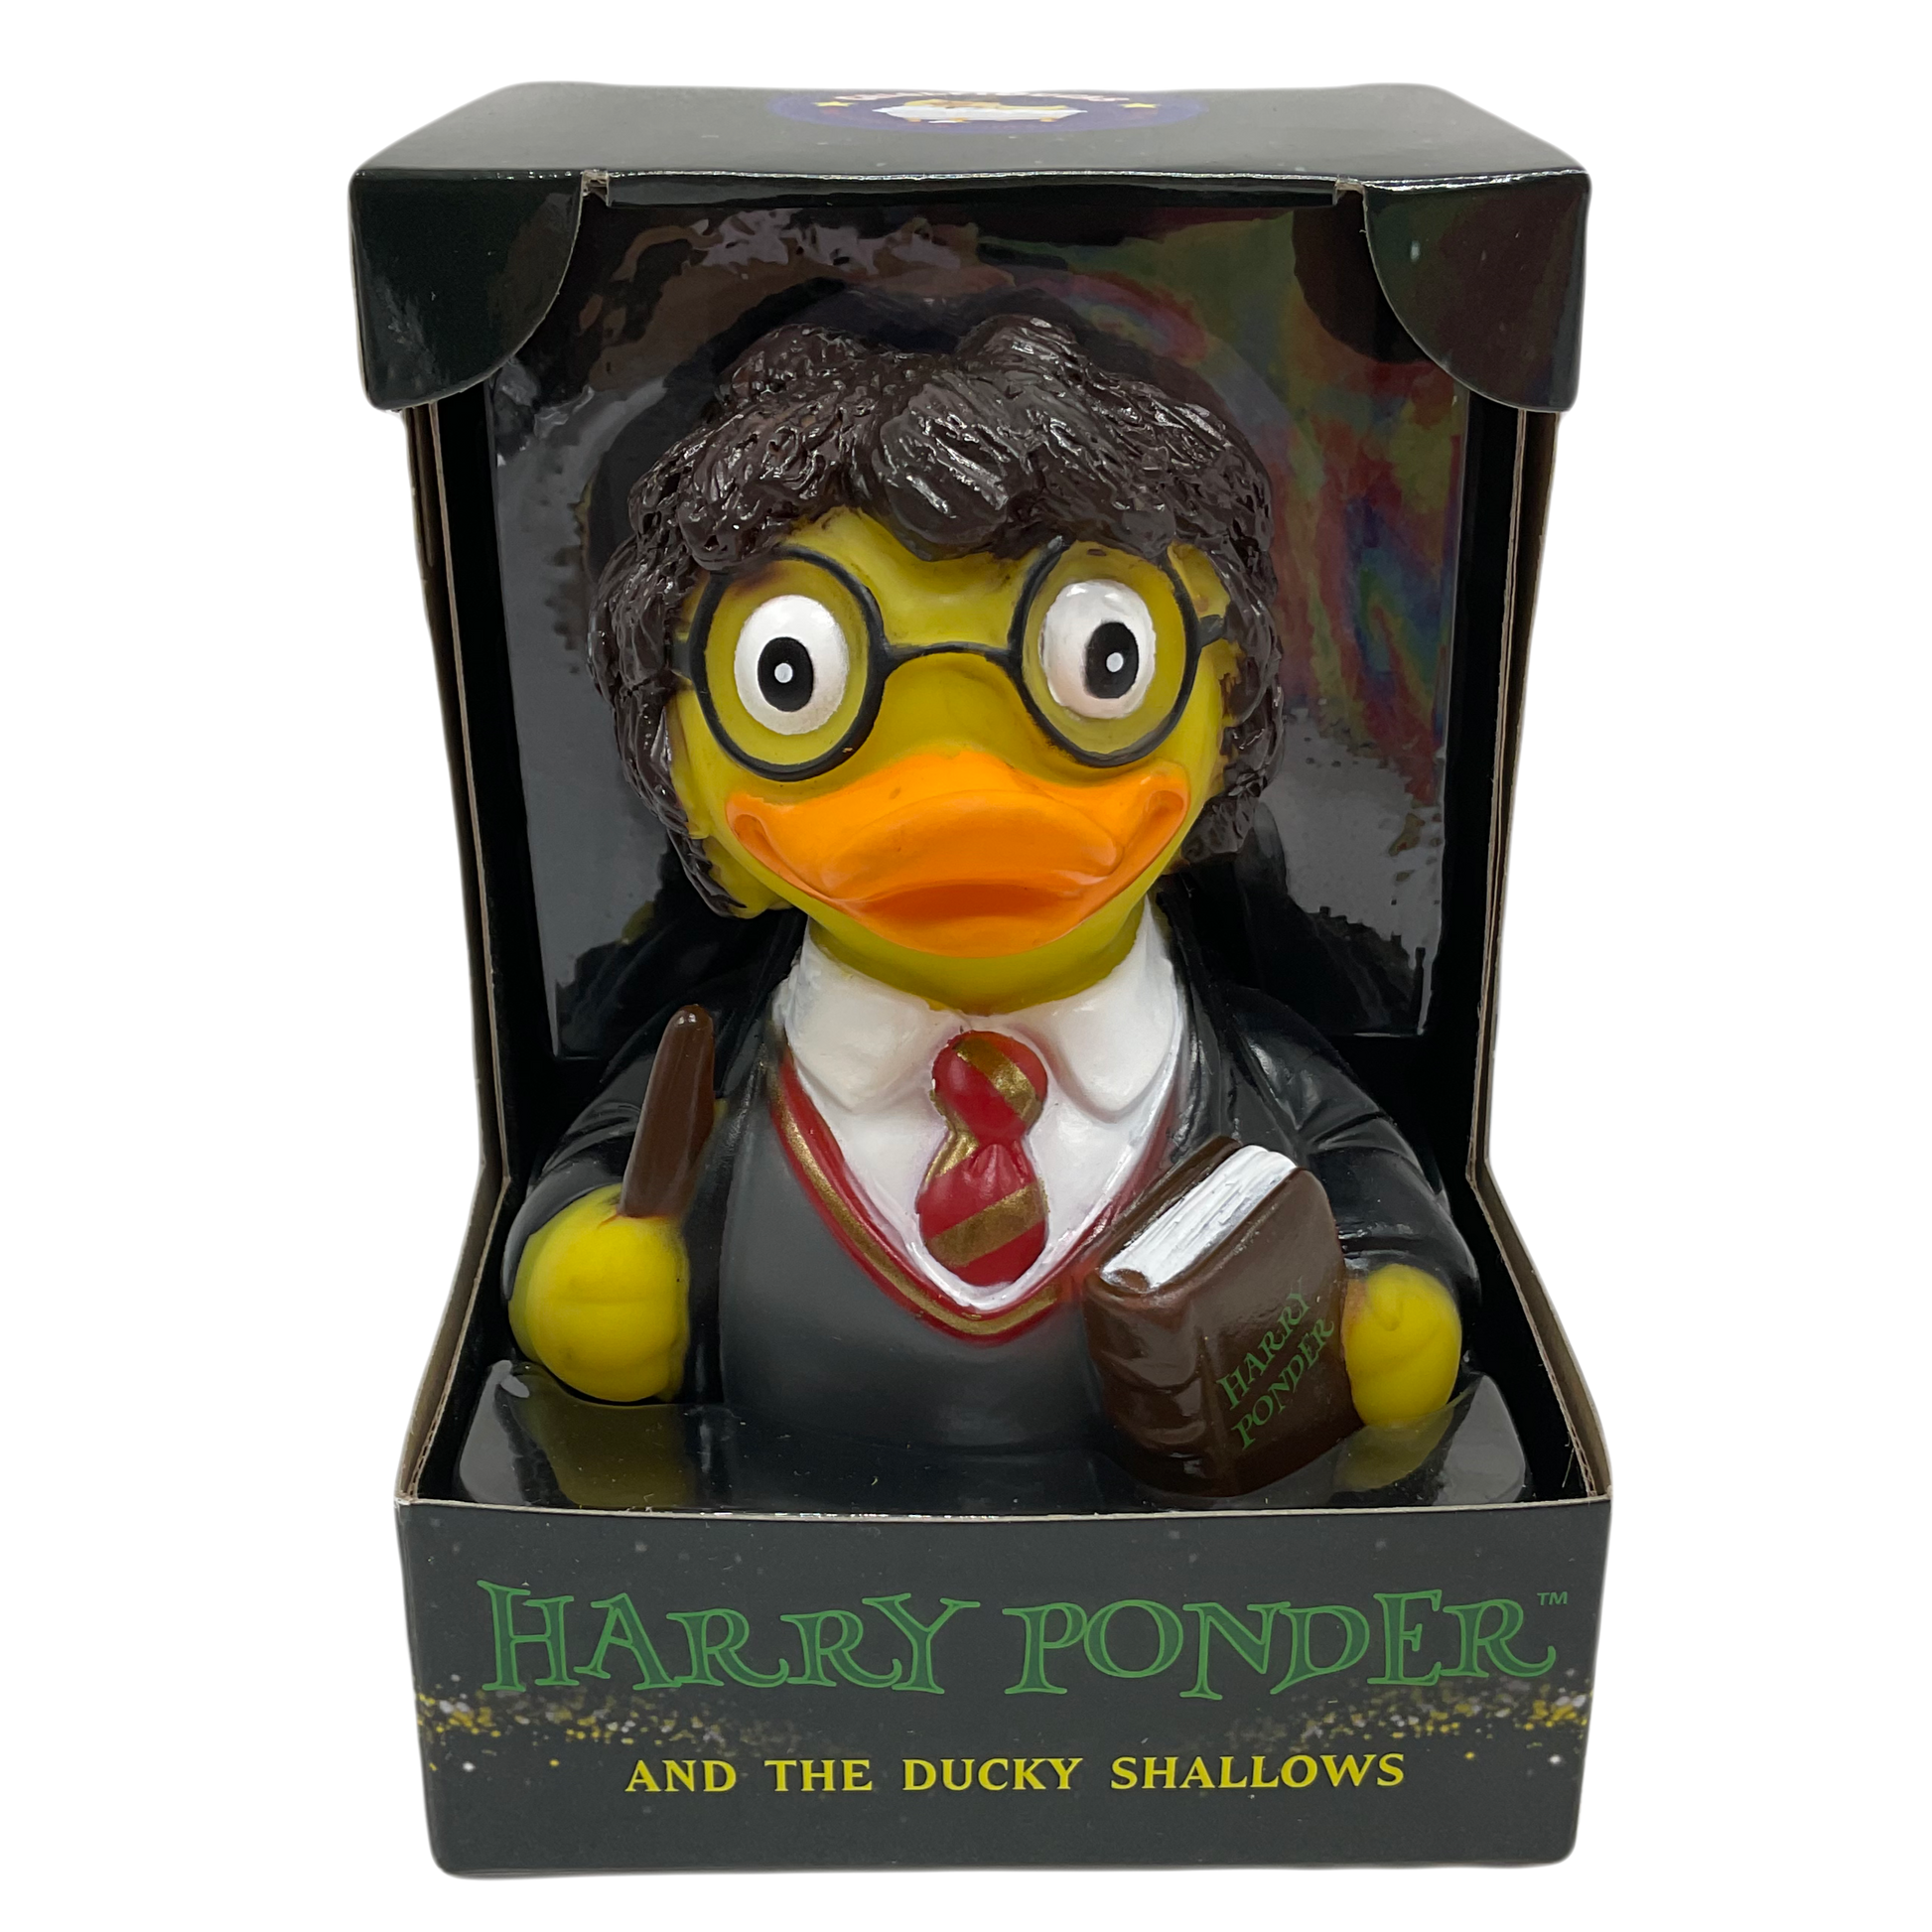 Harry Potter Harry Ponder Celebriduck Rubber Duck